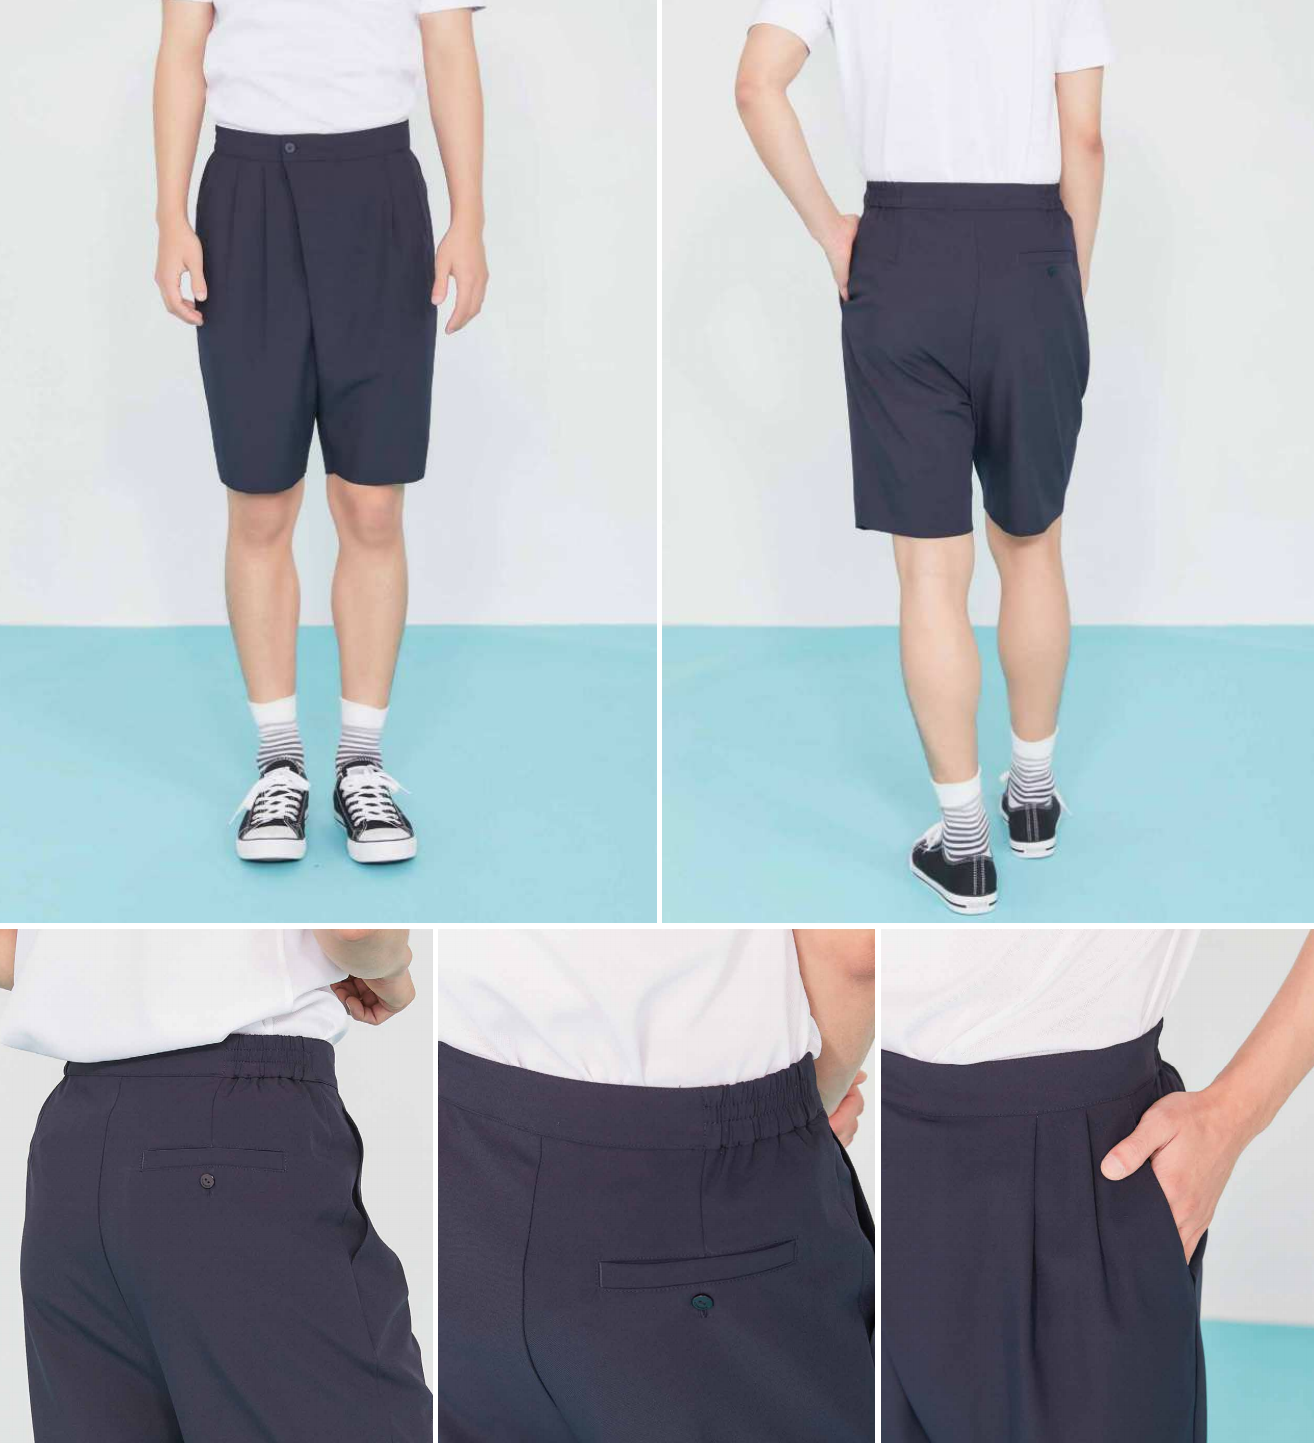 Hanbok Uniforms - Men's active wear shorts